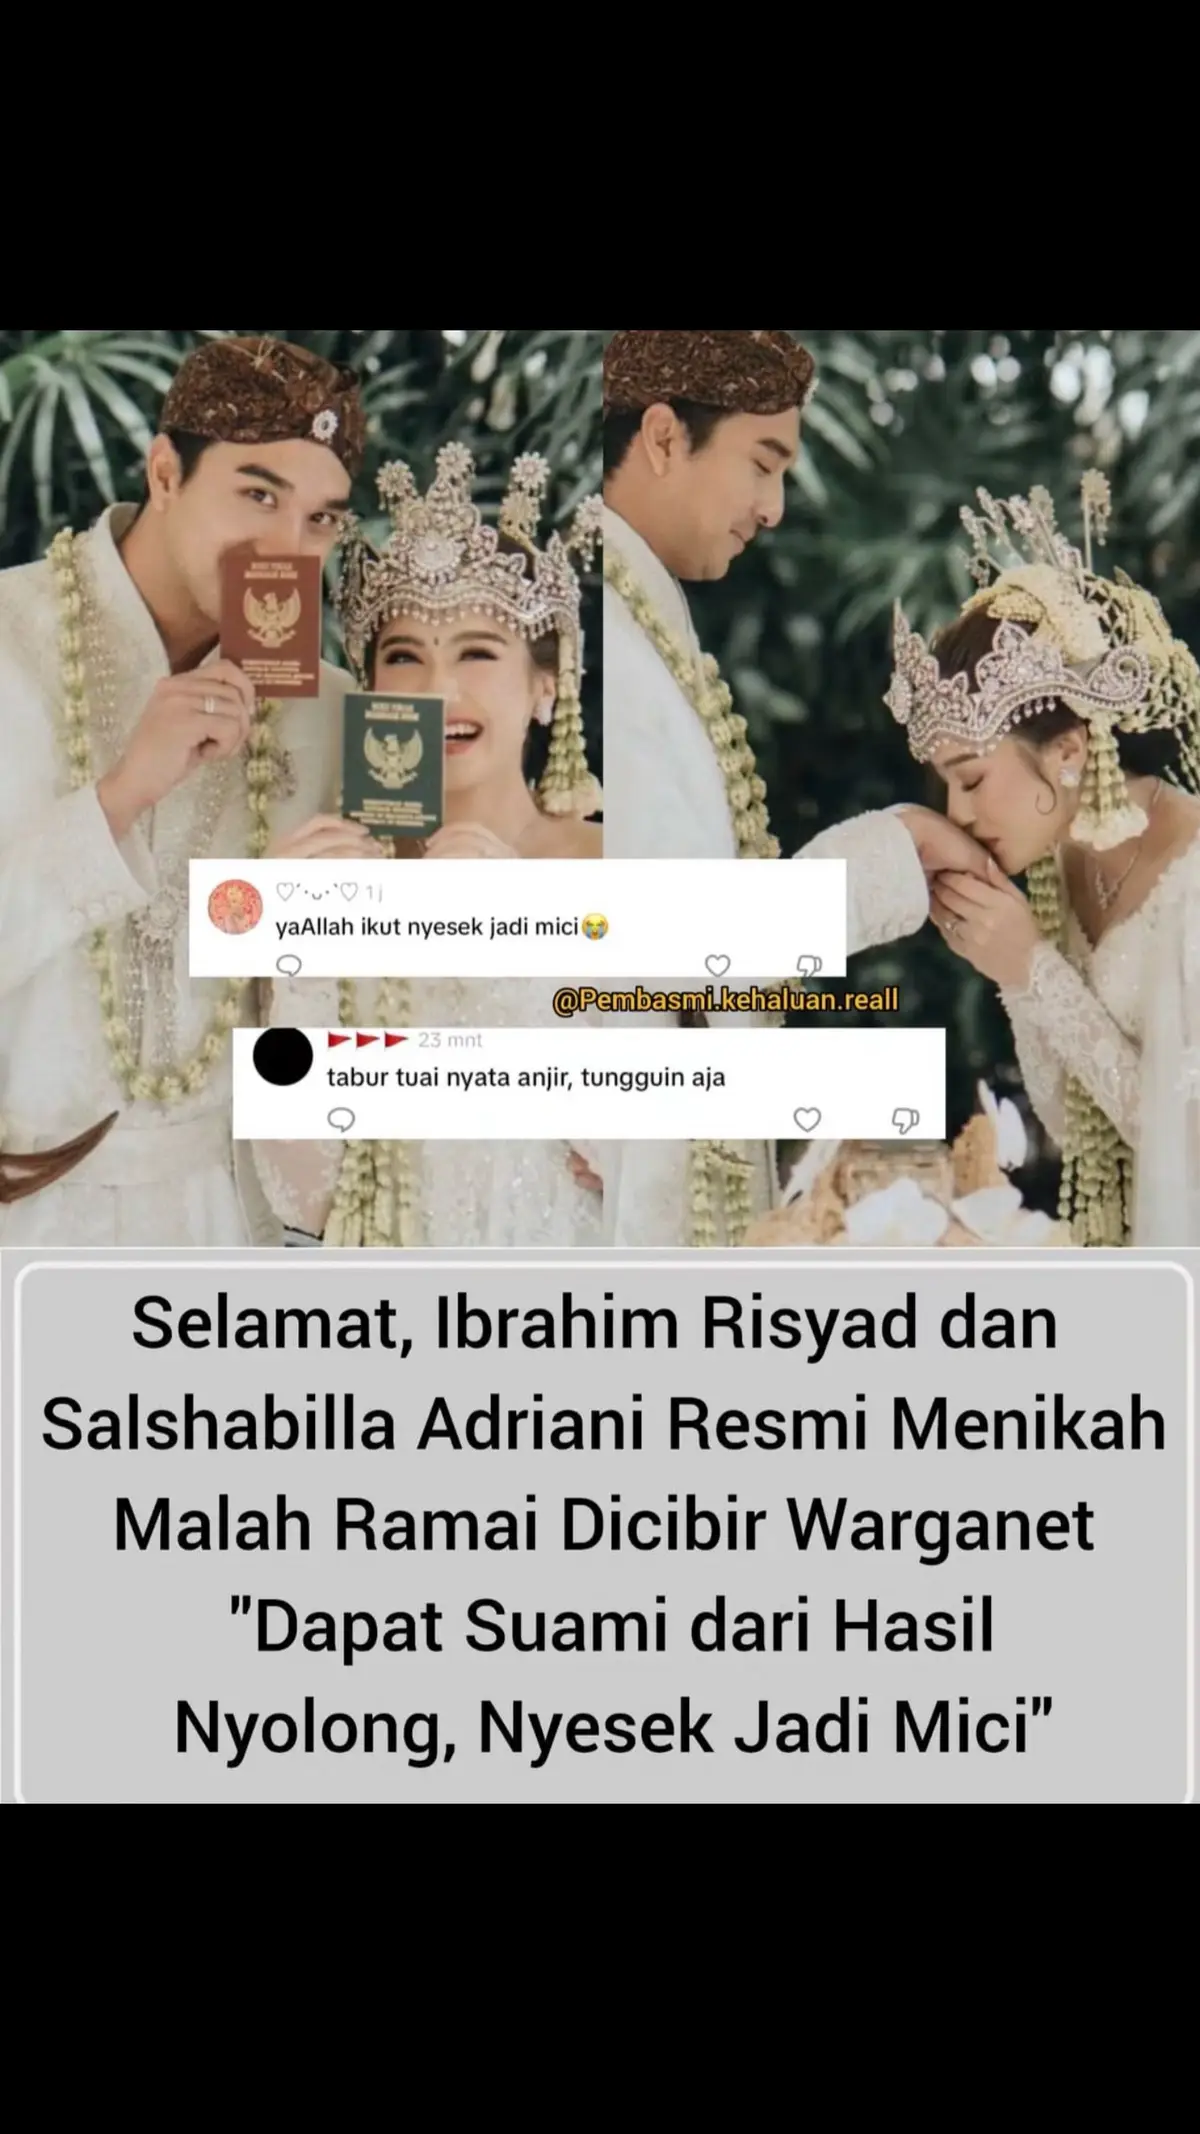 Sashabilla adriani dan ibrahim risyad resmi menikah, malah ramai dicibir netizen #salshabillaadriani #ibrahimrisyad #menikah #fyp #fyppppppppppppppppppppppp #viraltiktok 